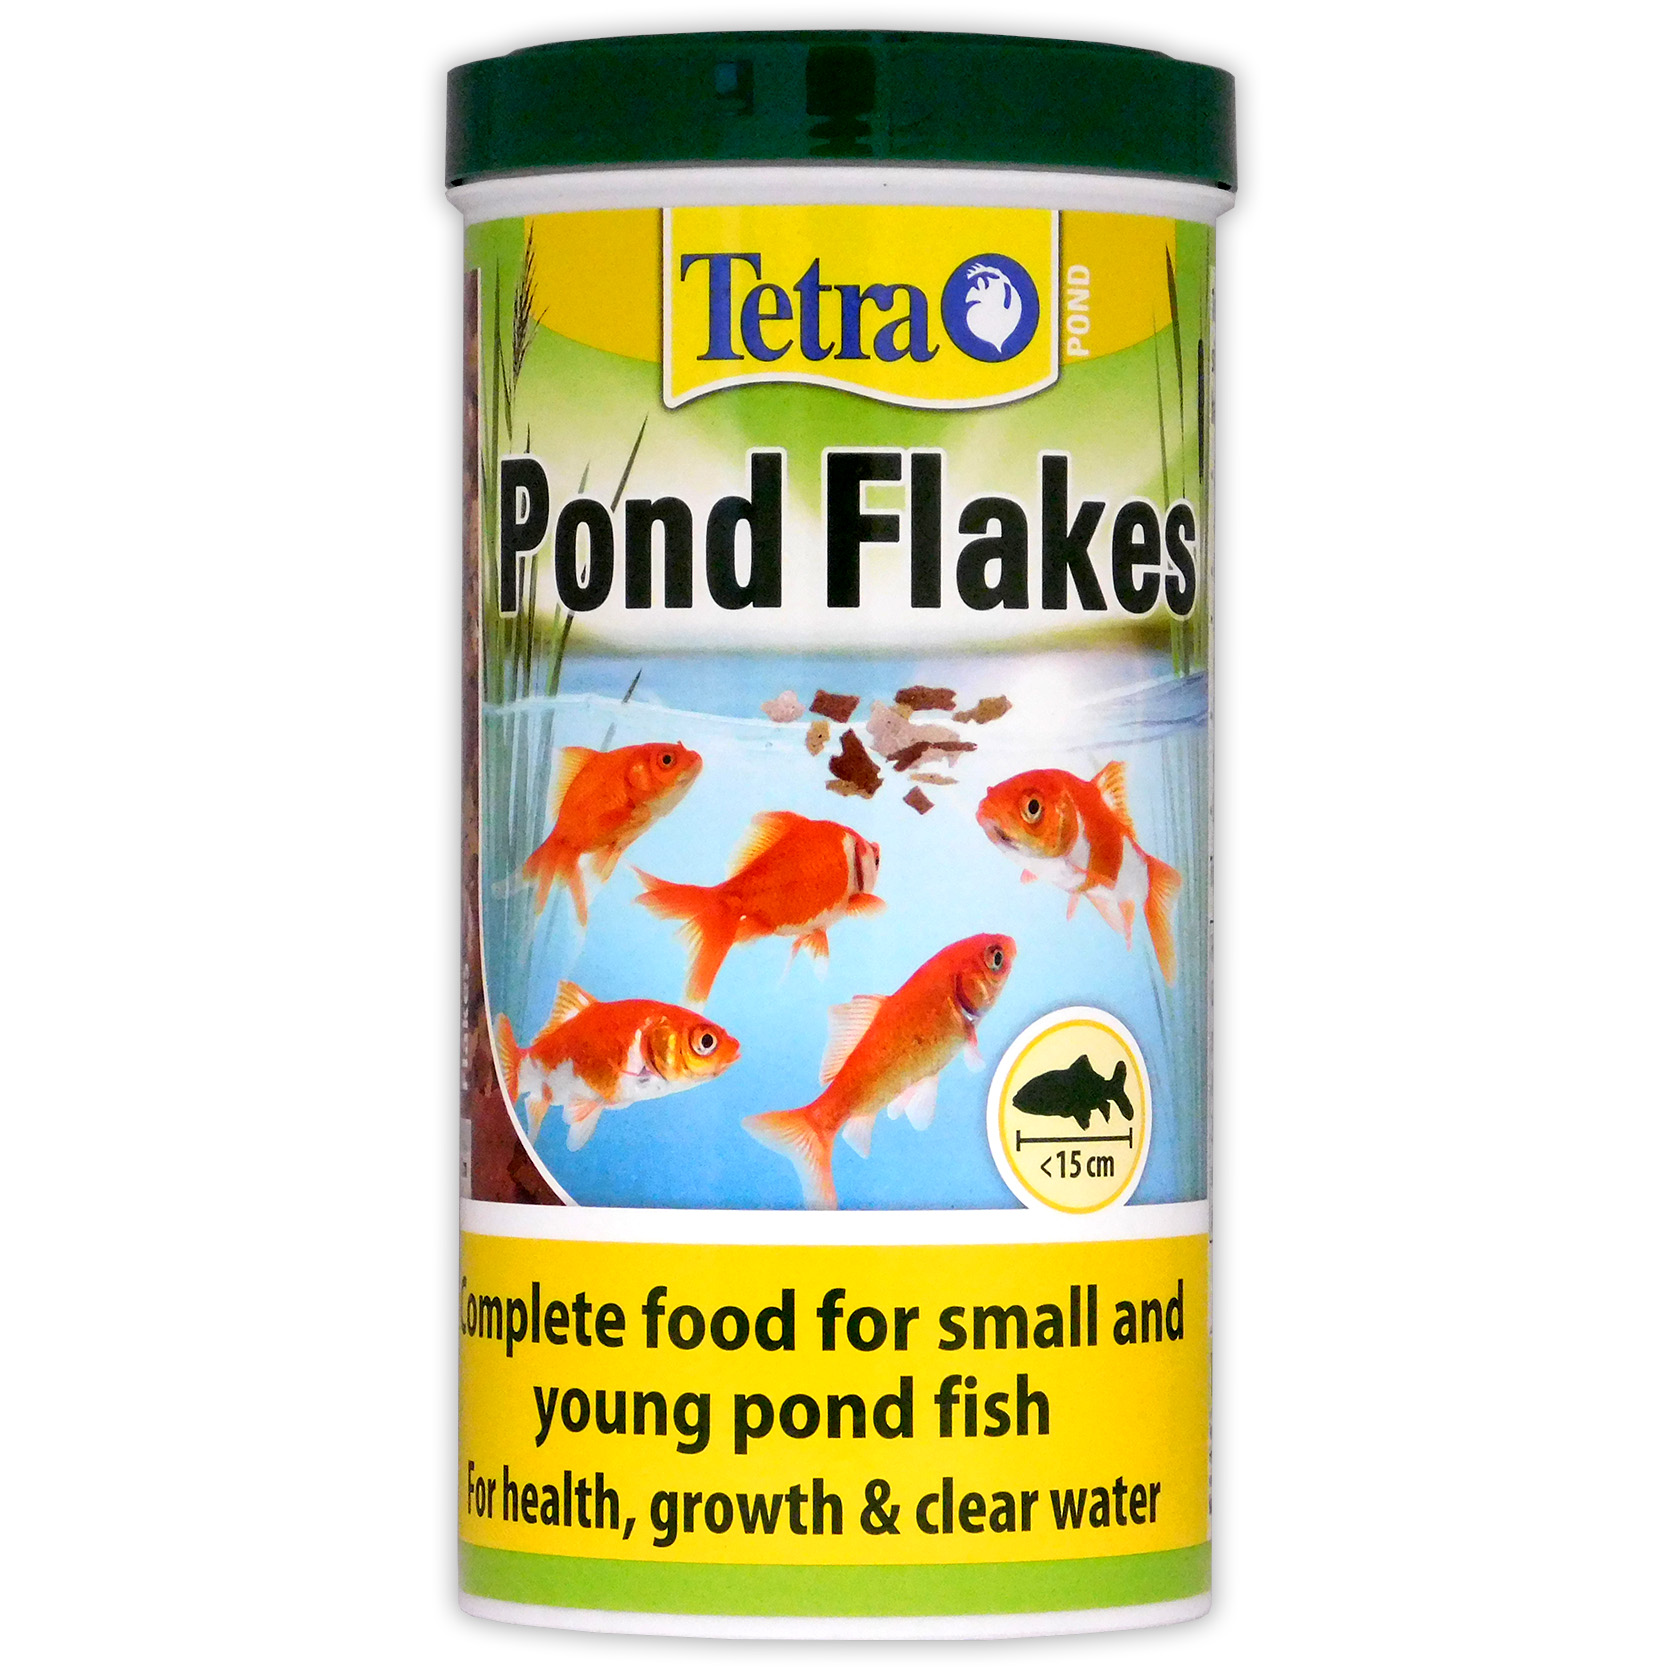 TetraPond Pond Flakes